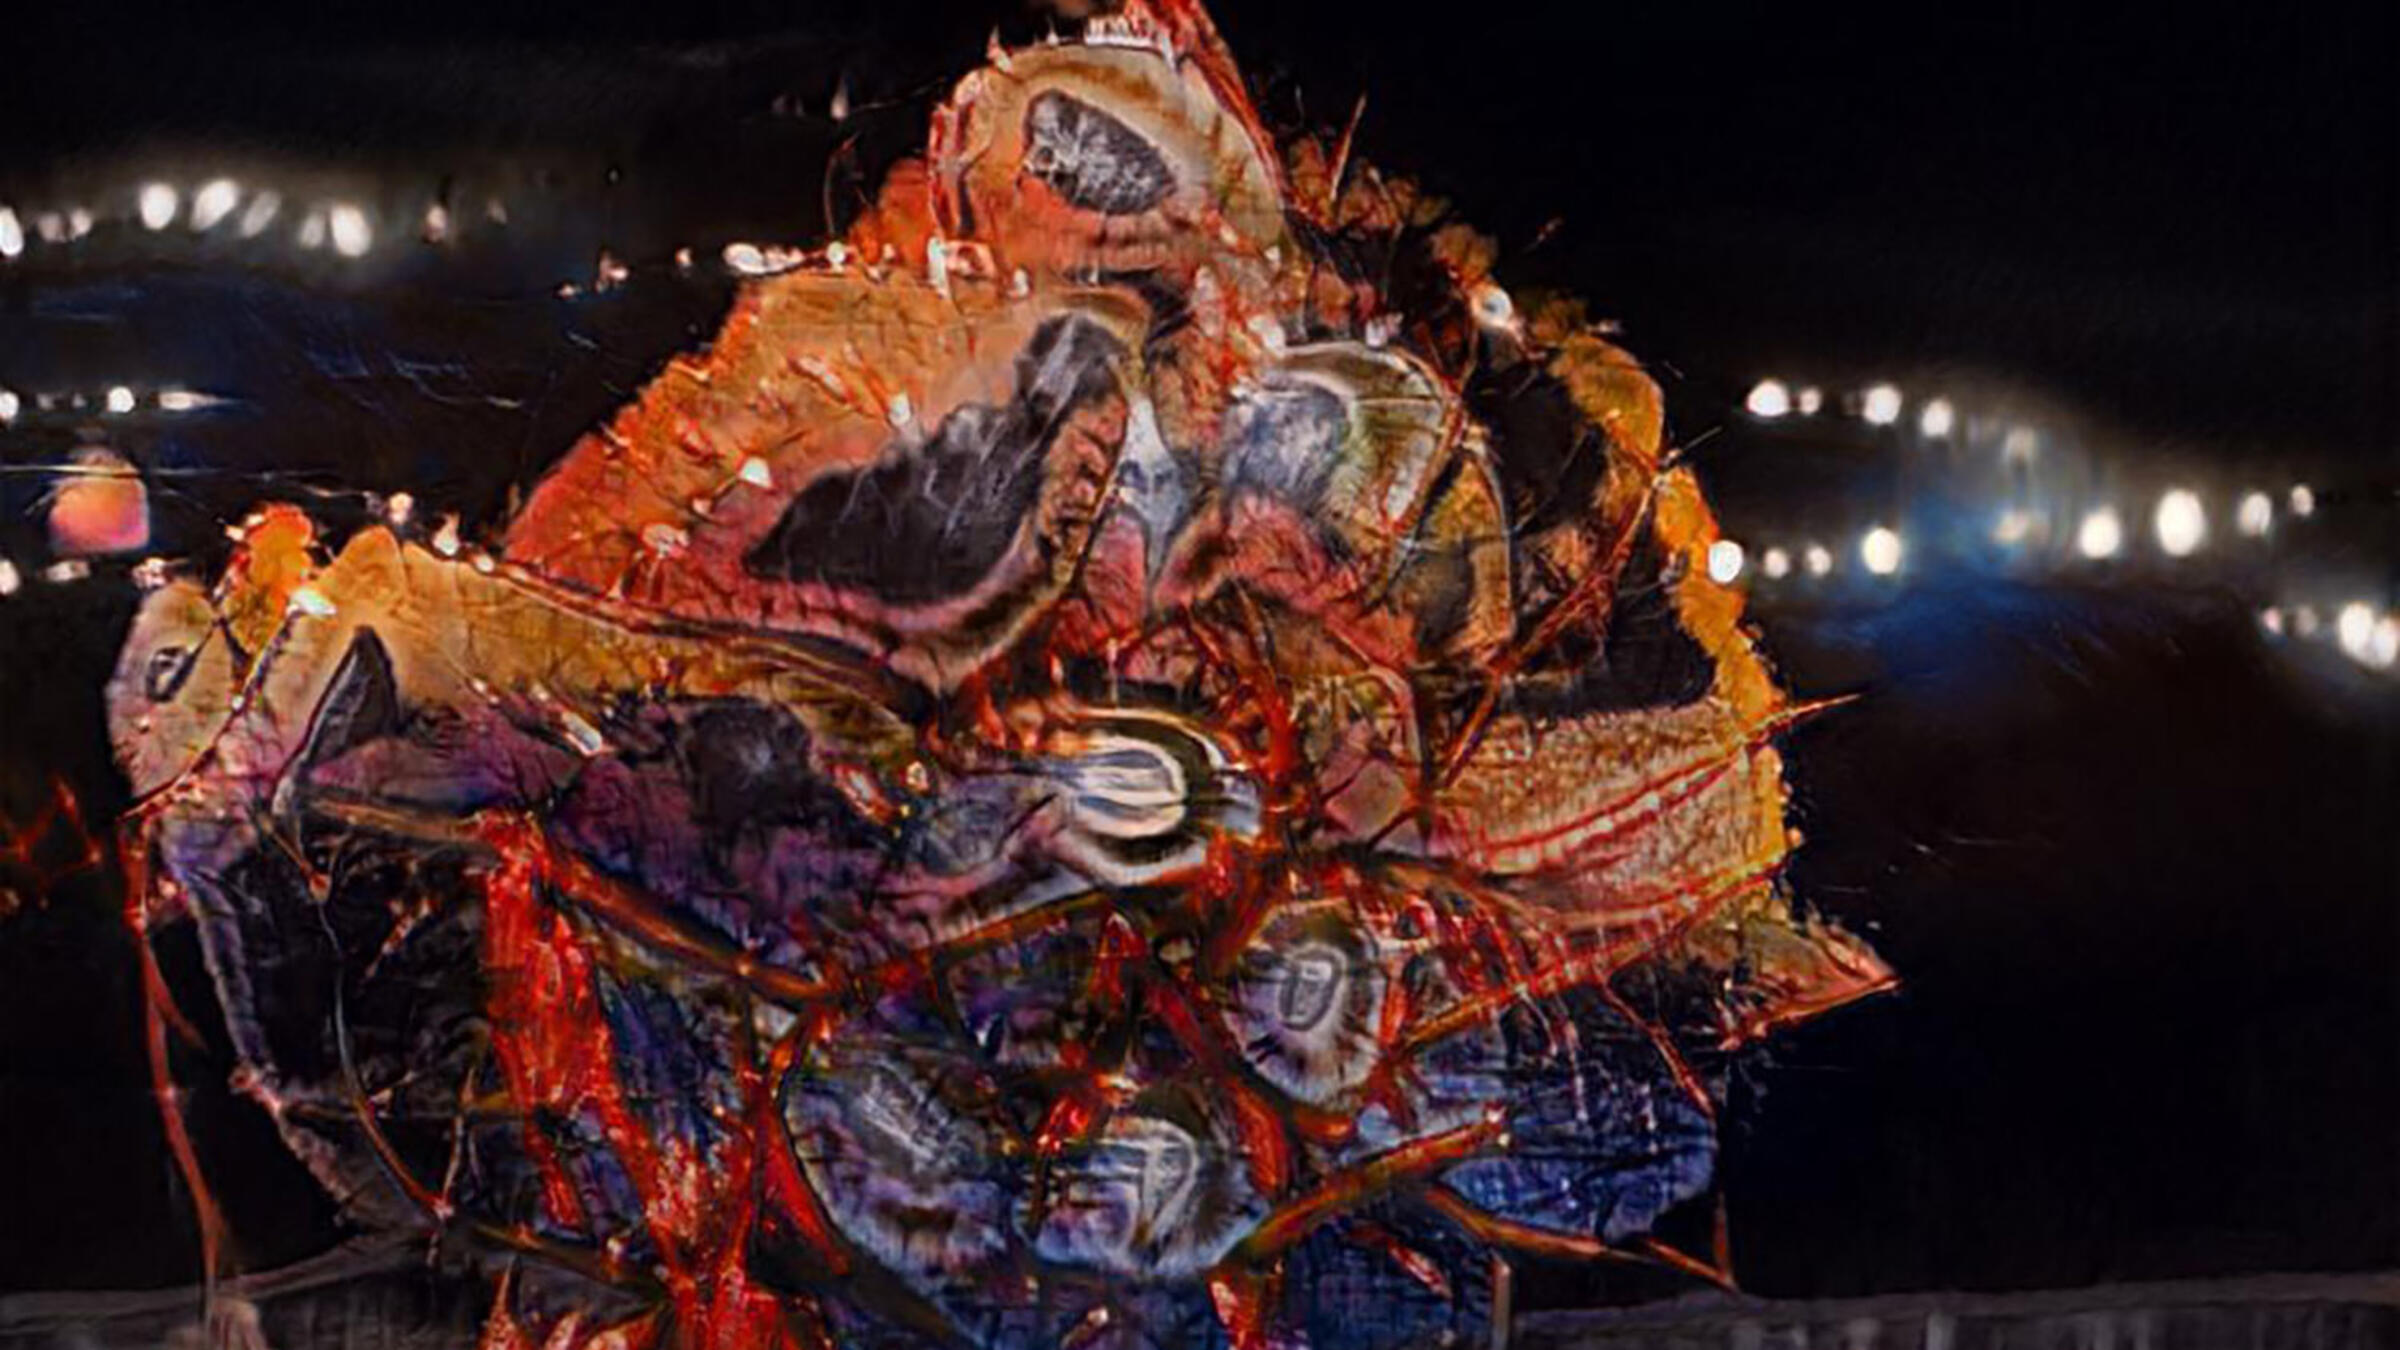 AI-generated dancing sculpture based on dancing sculptures in Carnival in Trinidad & Tobago.